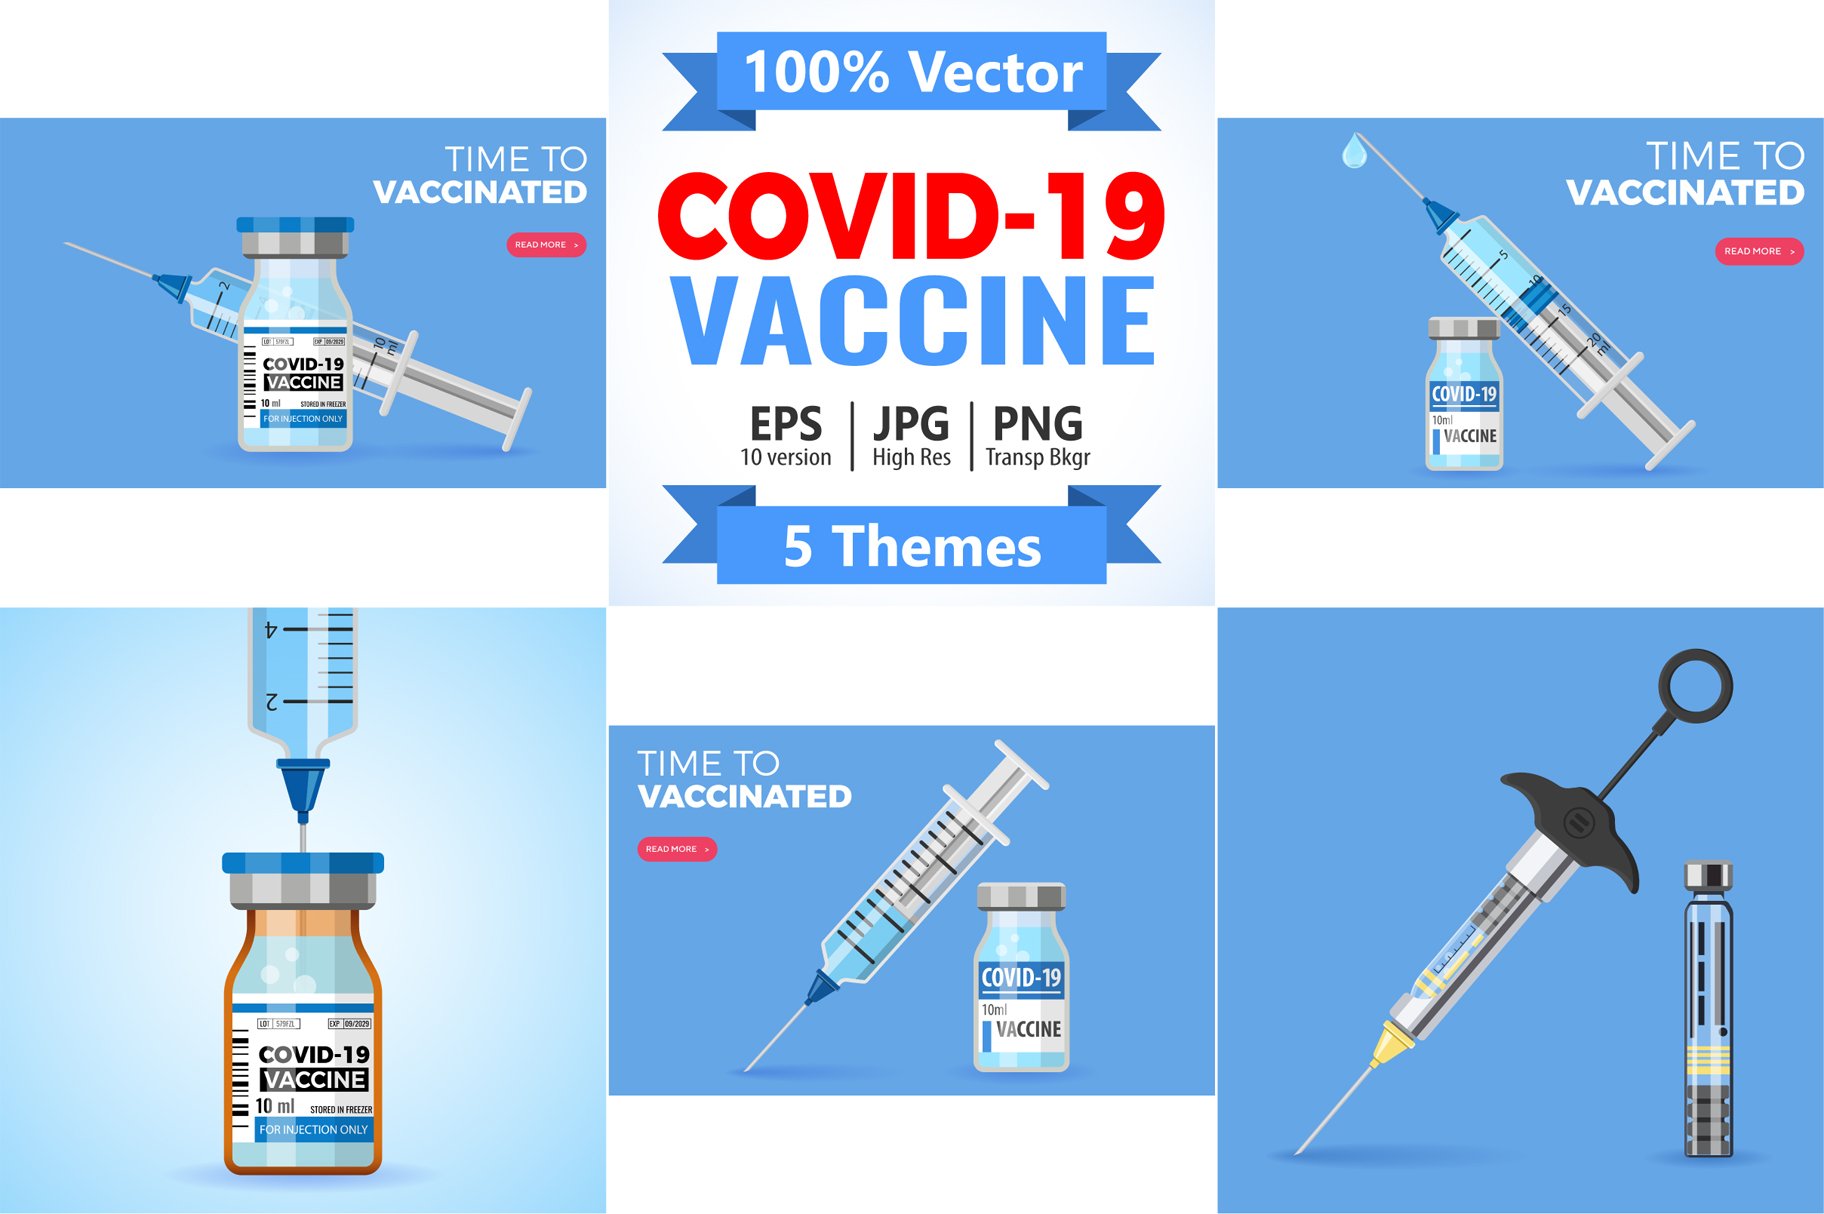 Covid-19 coronavirus vaccine syringe cover image.